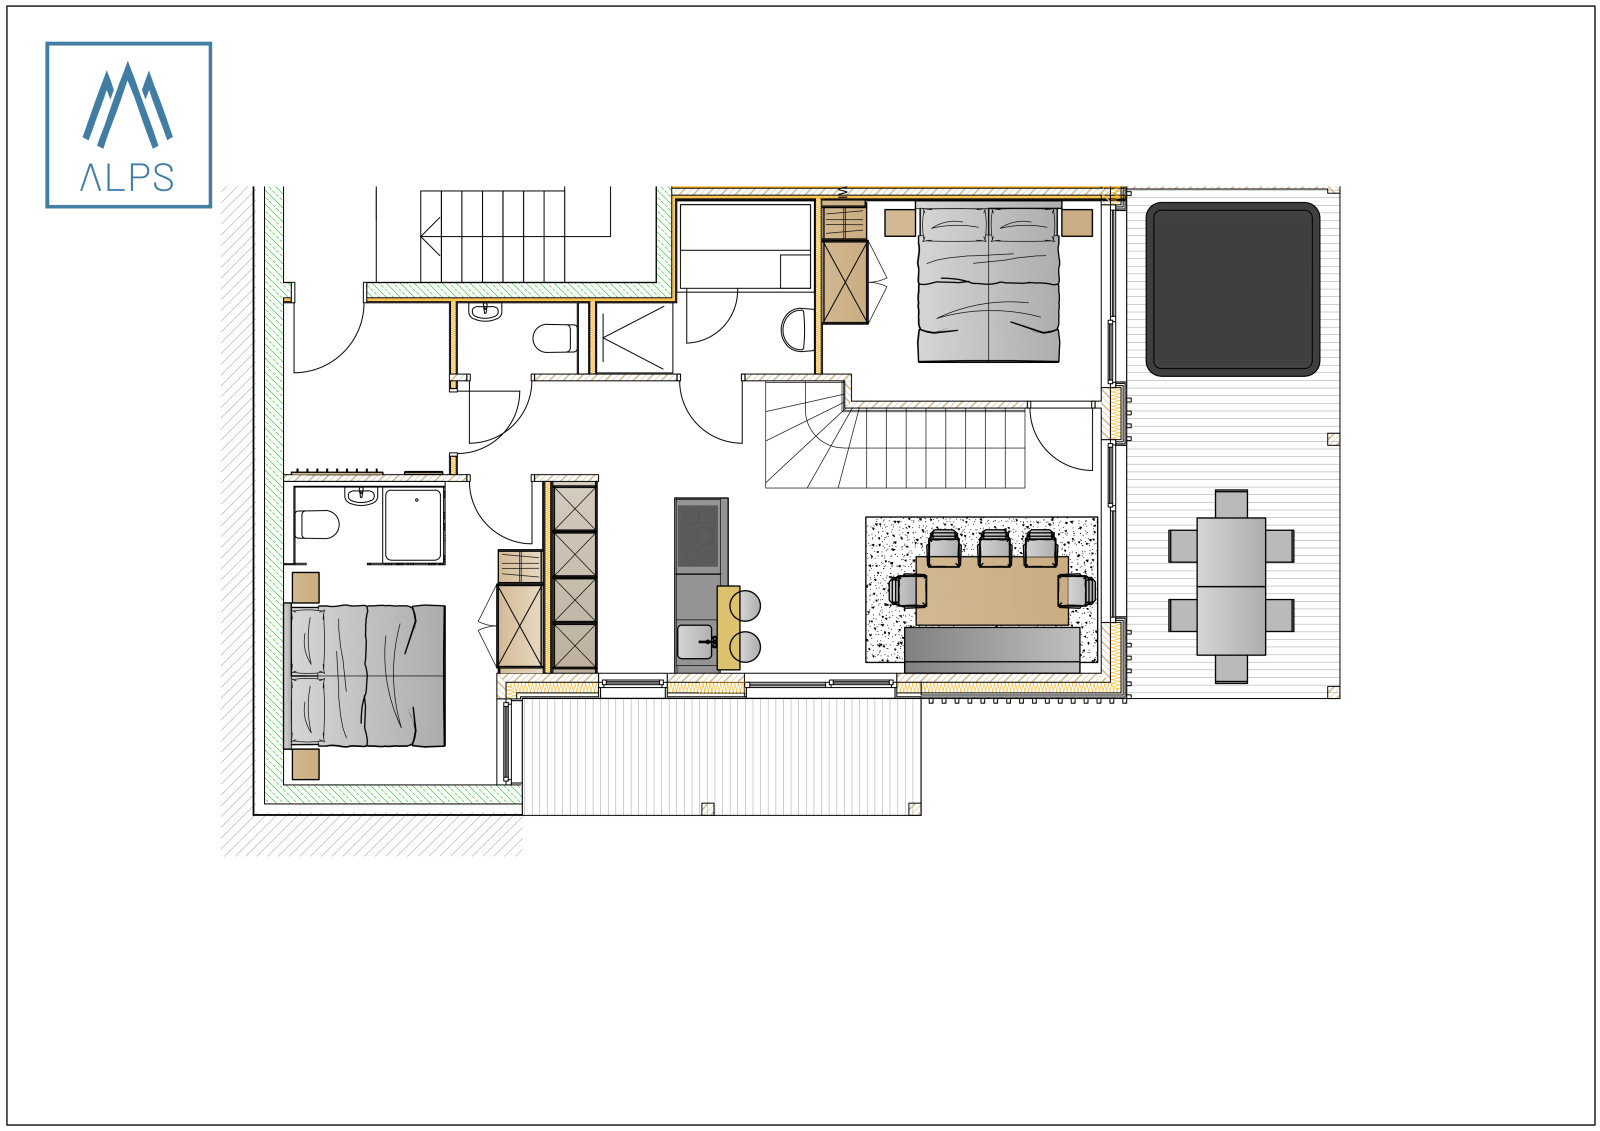 Planai superior apartman - 120 m2 / 6 fős - földszinti alaprajz